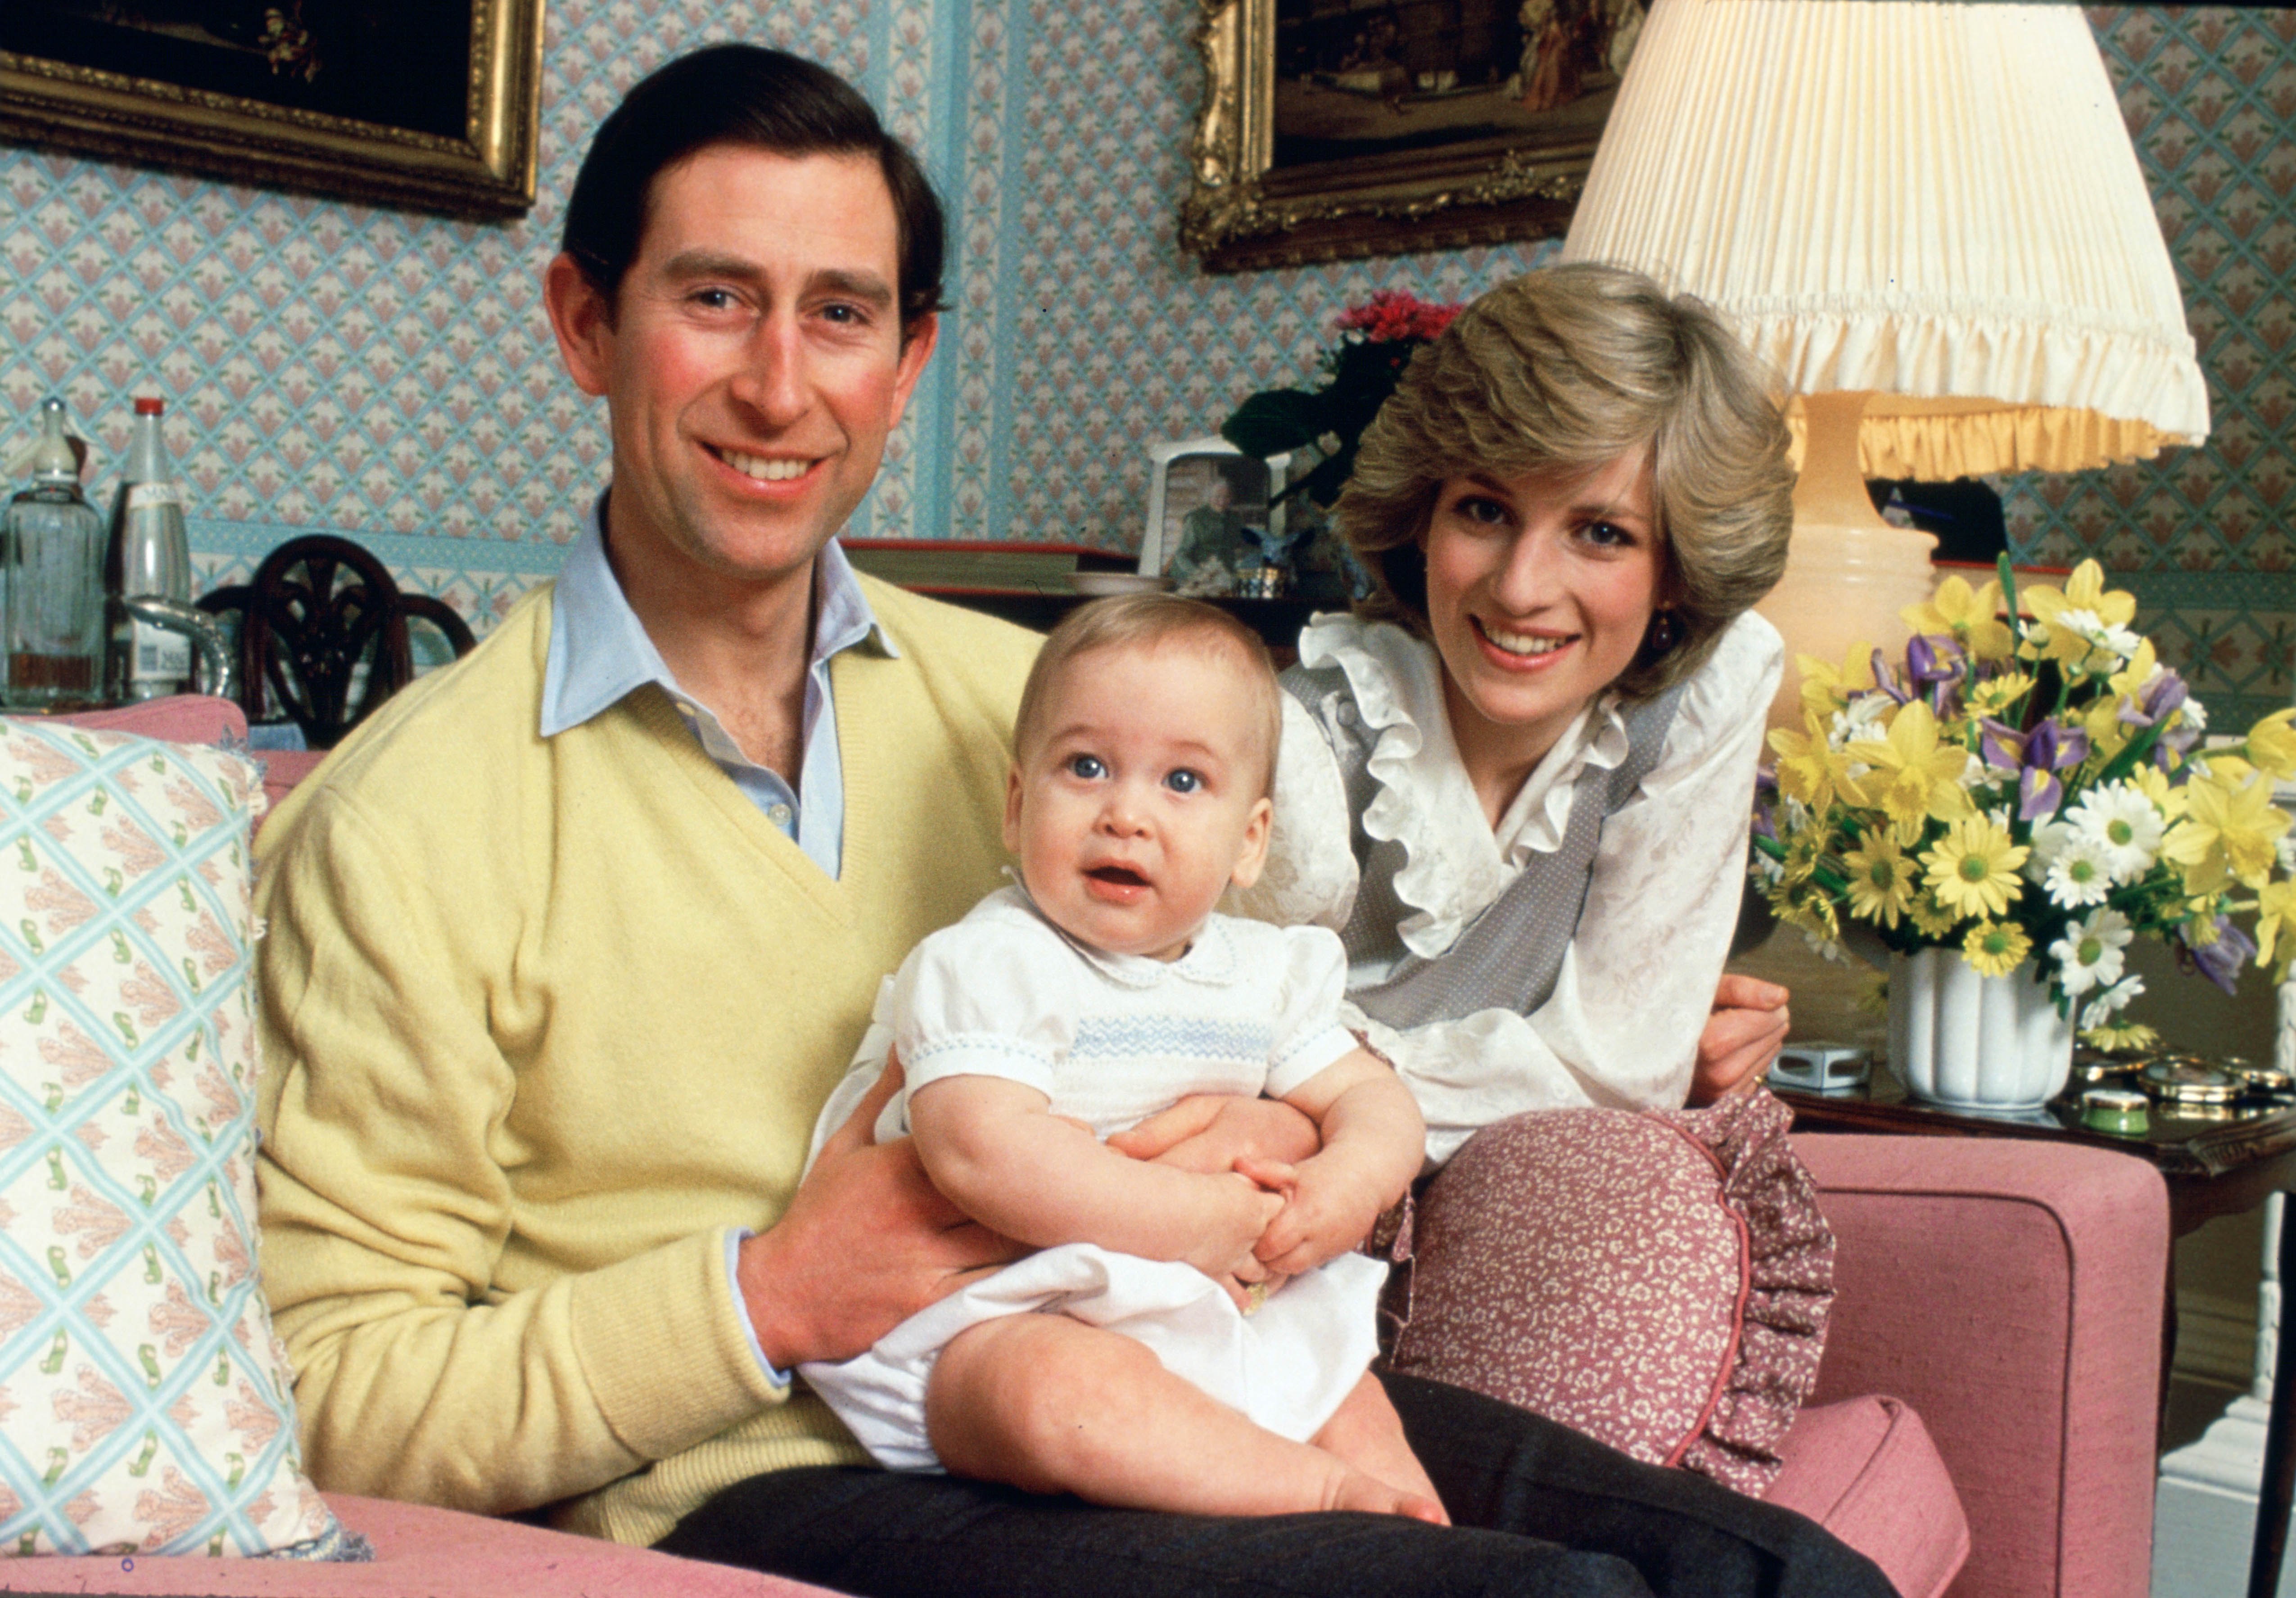 Prince Charles, Prince William, and Princess Diana |  Tim Graham Photo Library via Getty Images